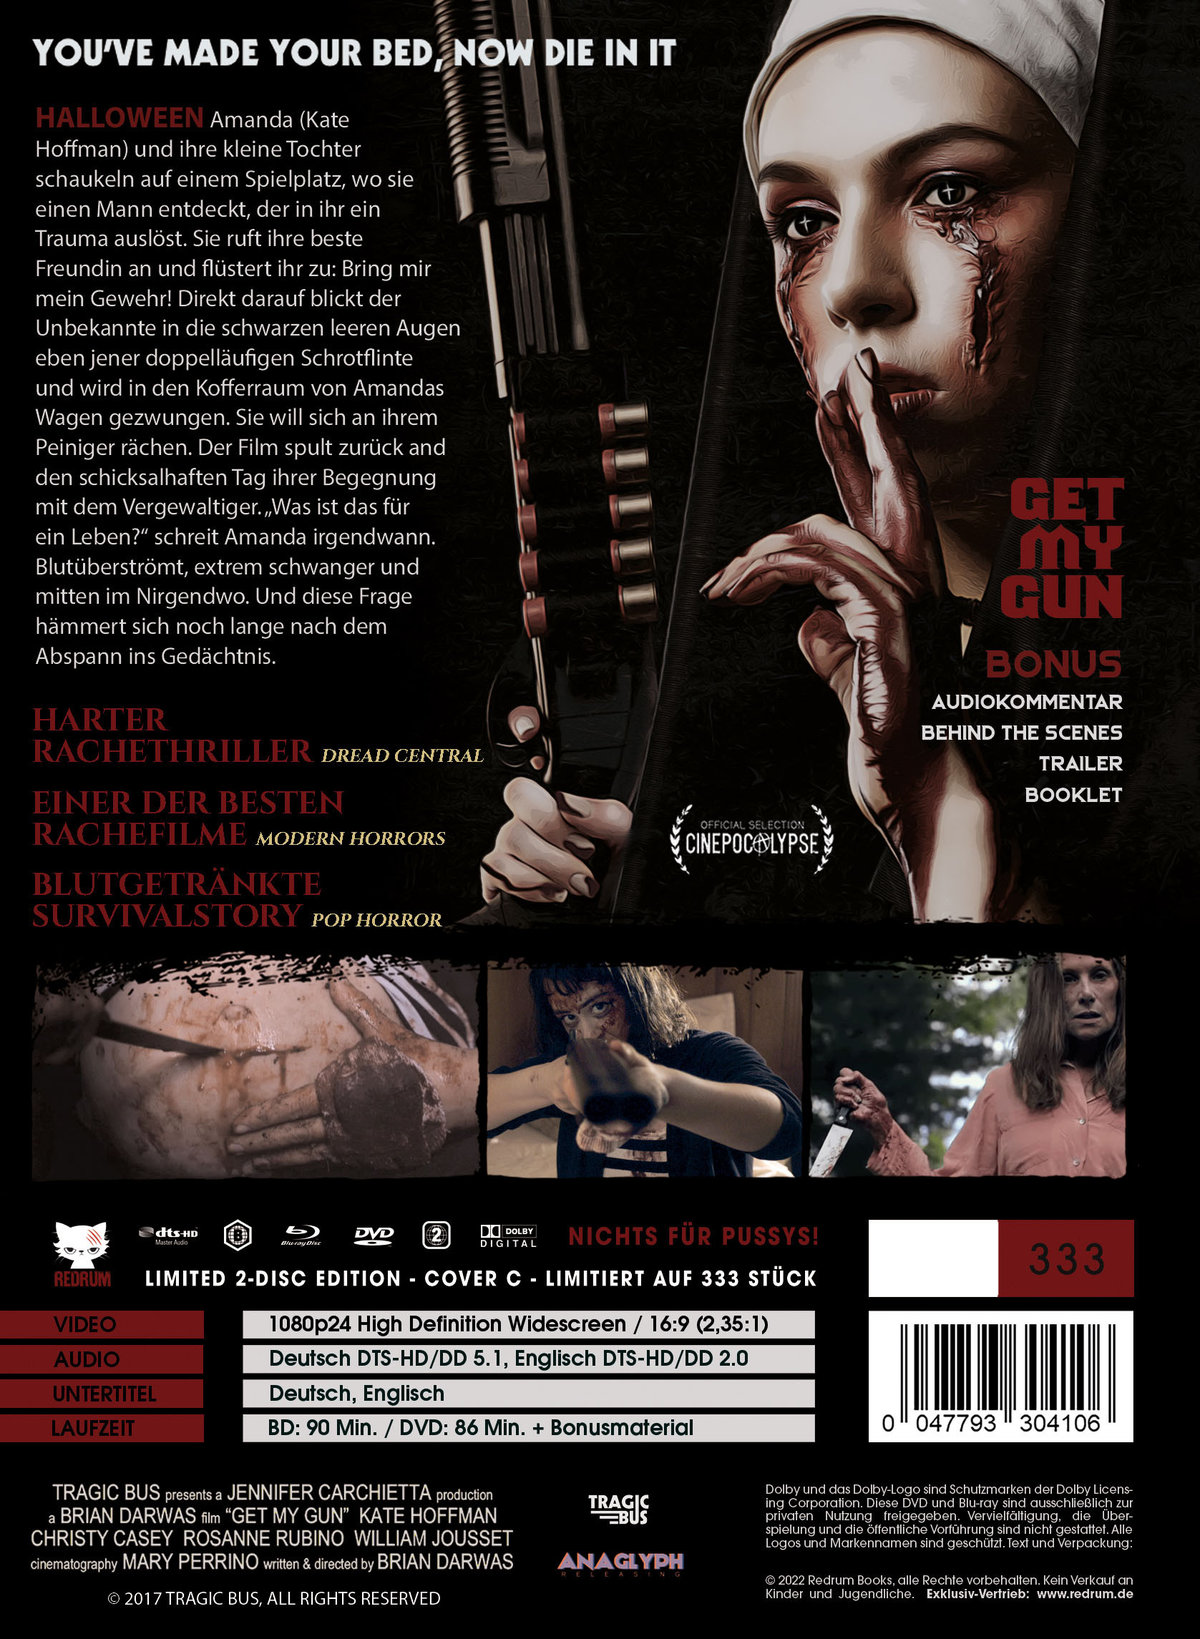 Get My Gun - Mein ist die Rache - Uncut Mediabook Edition (DVD+blu-ray) (C)